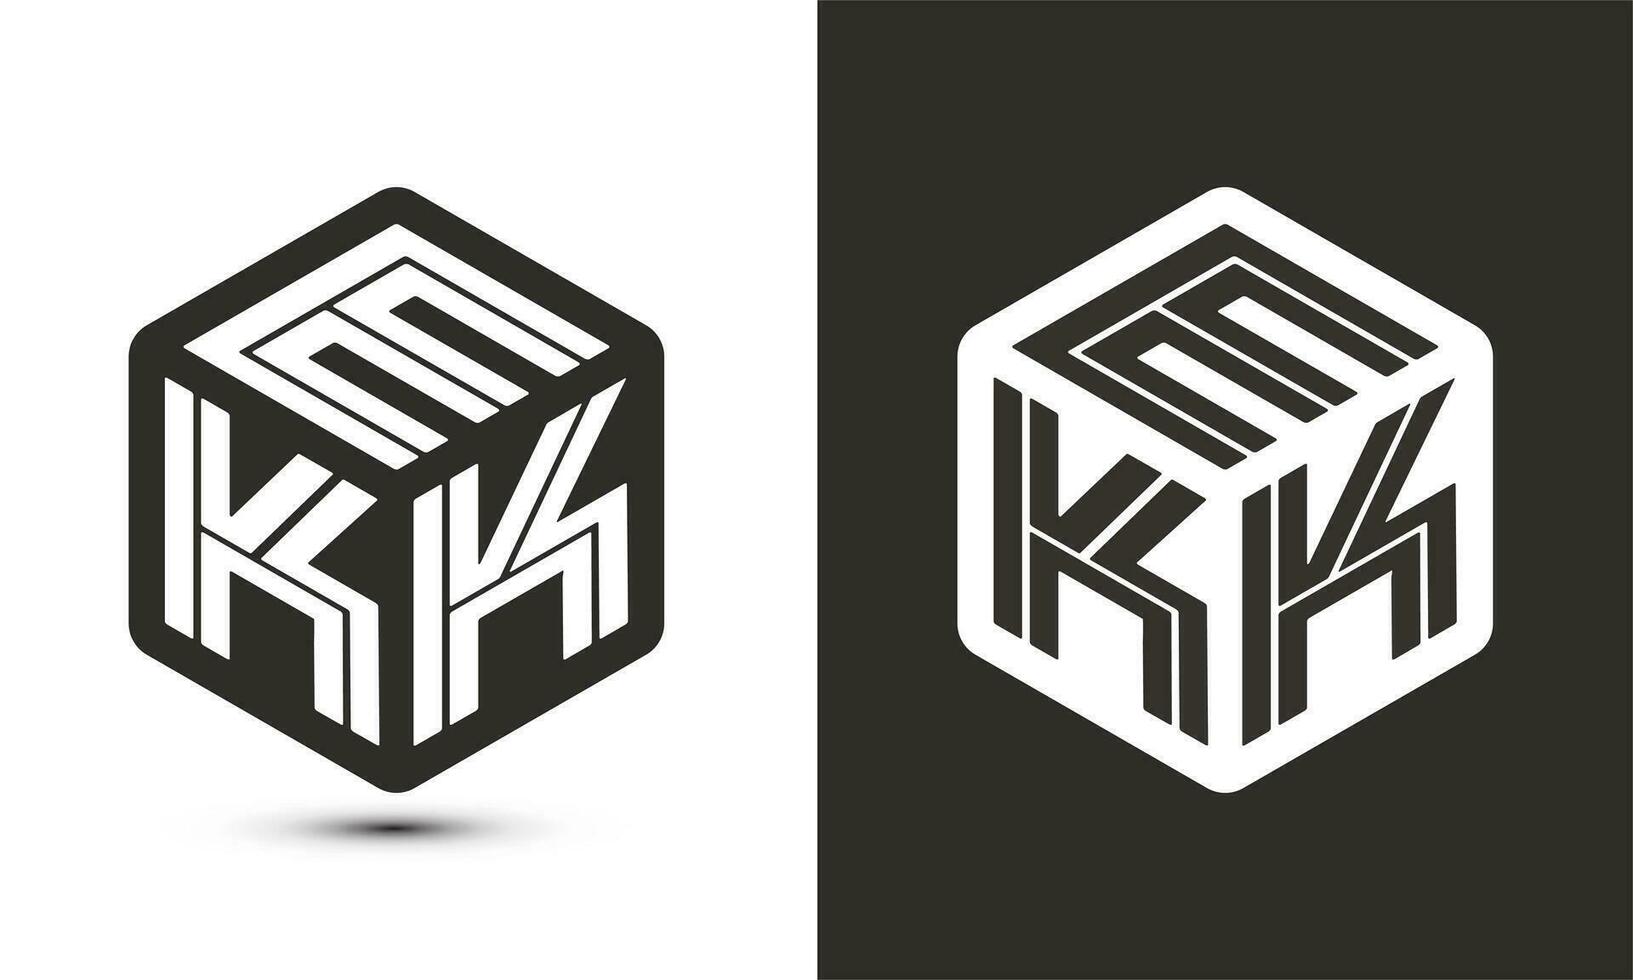 ekk letra logo diseño con ilustrador cubo logo, vector logo moderno alfabeto fuente superposición estilo.